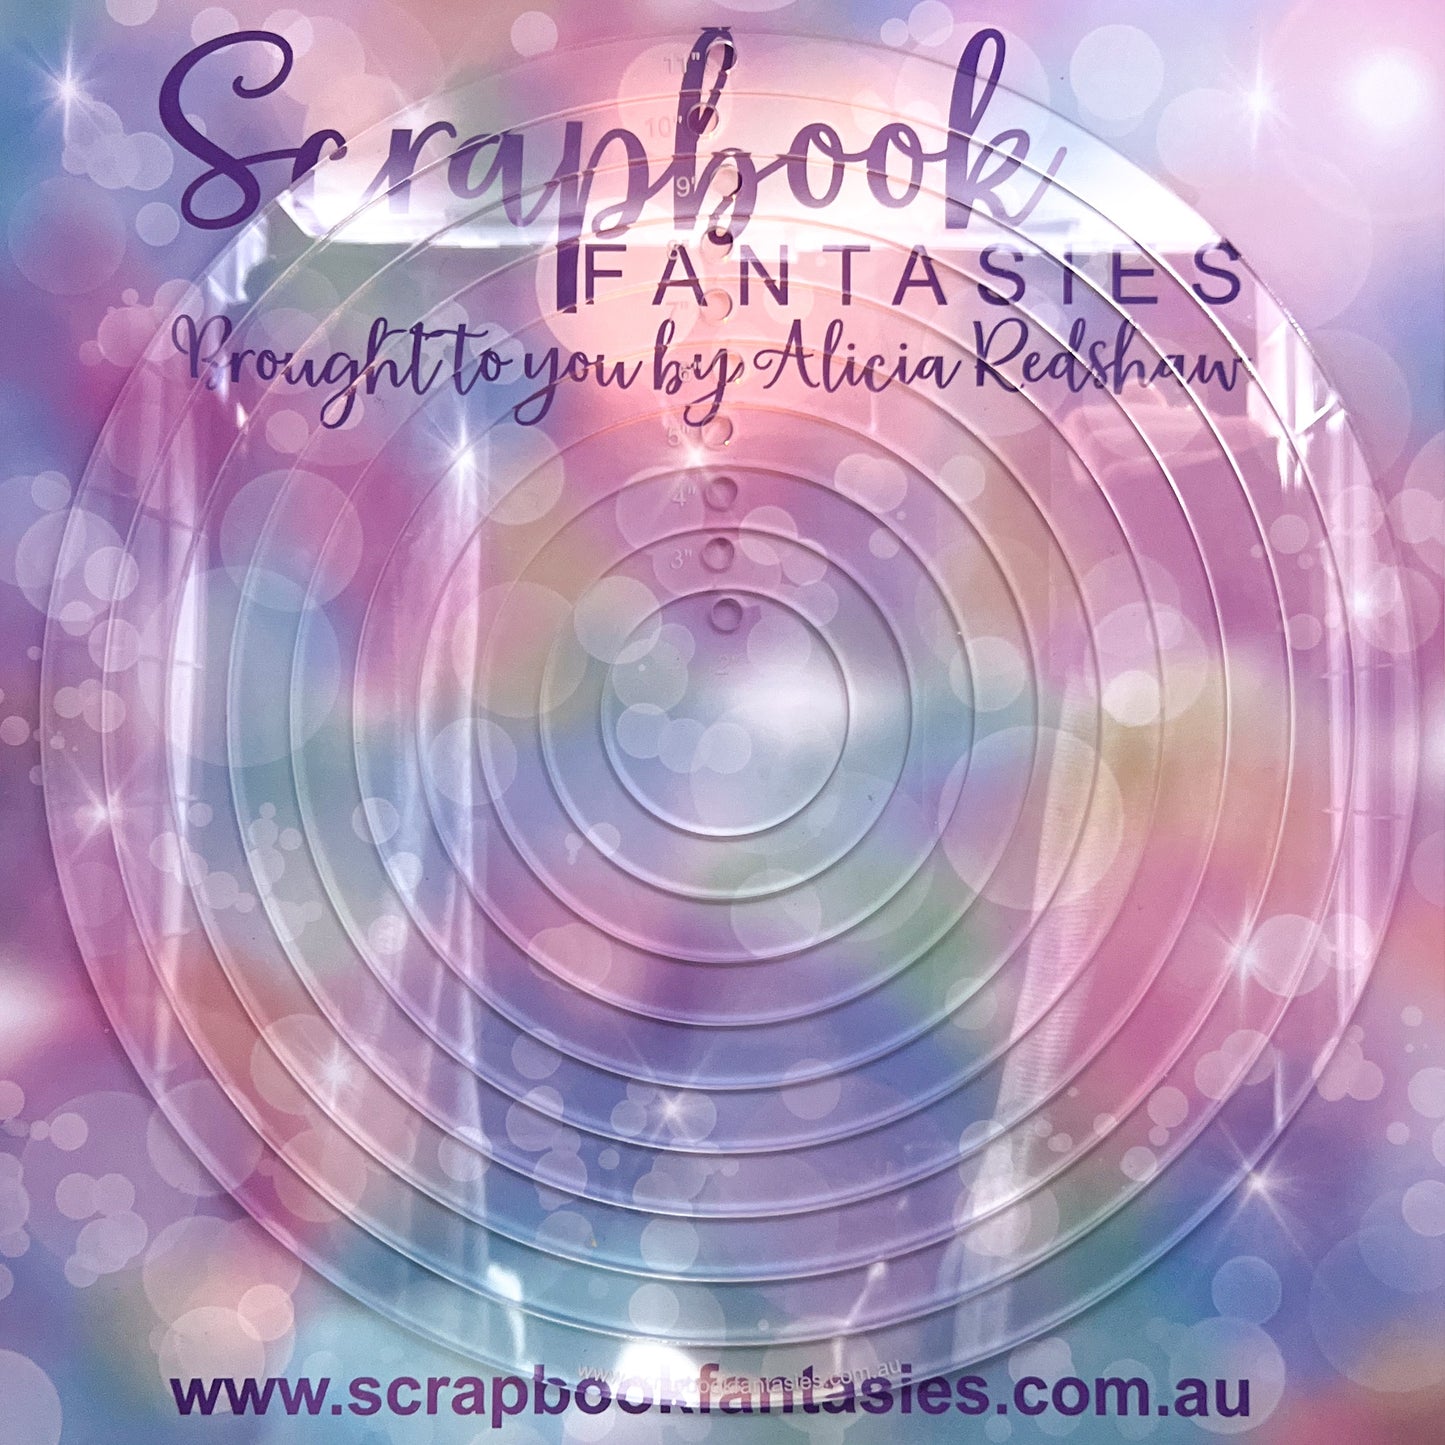 Scrapbook Fantasies Creative Template Set - Circles 1 (9 pieces) Designed by Alicia Redshaw 14737